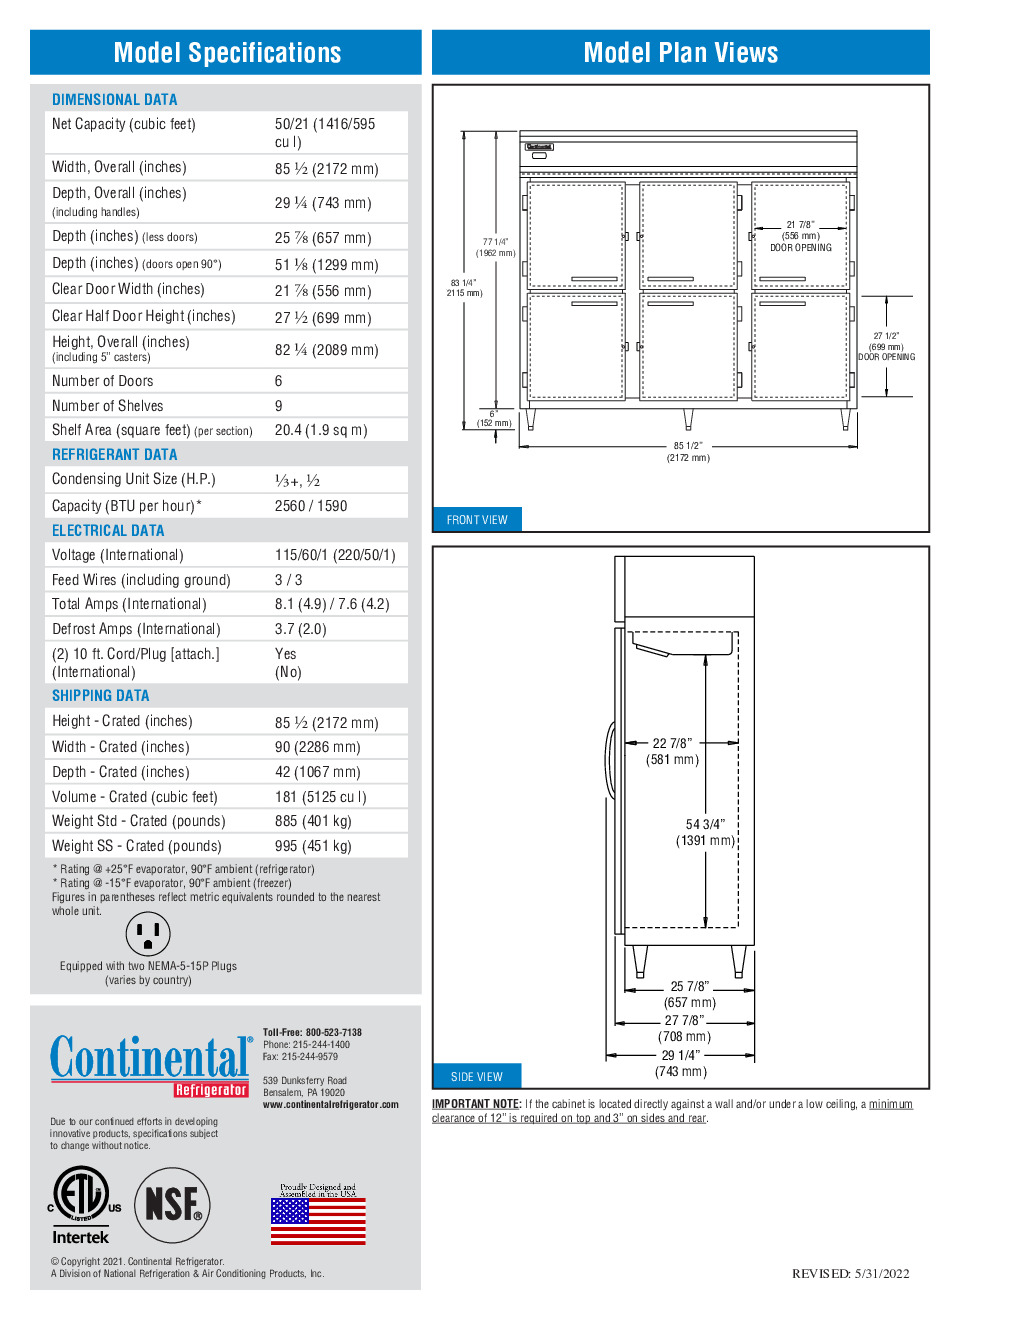 Continental Refrigerator D3RRFESNHD 85